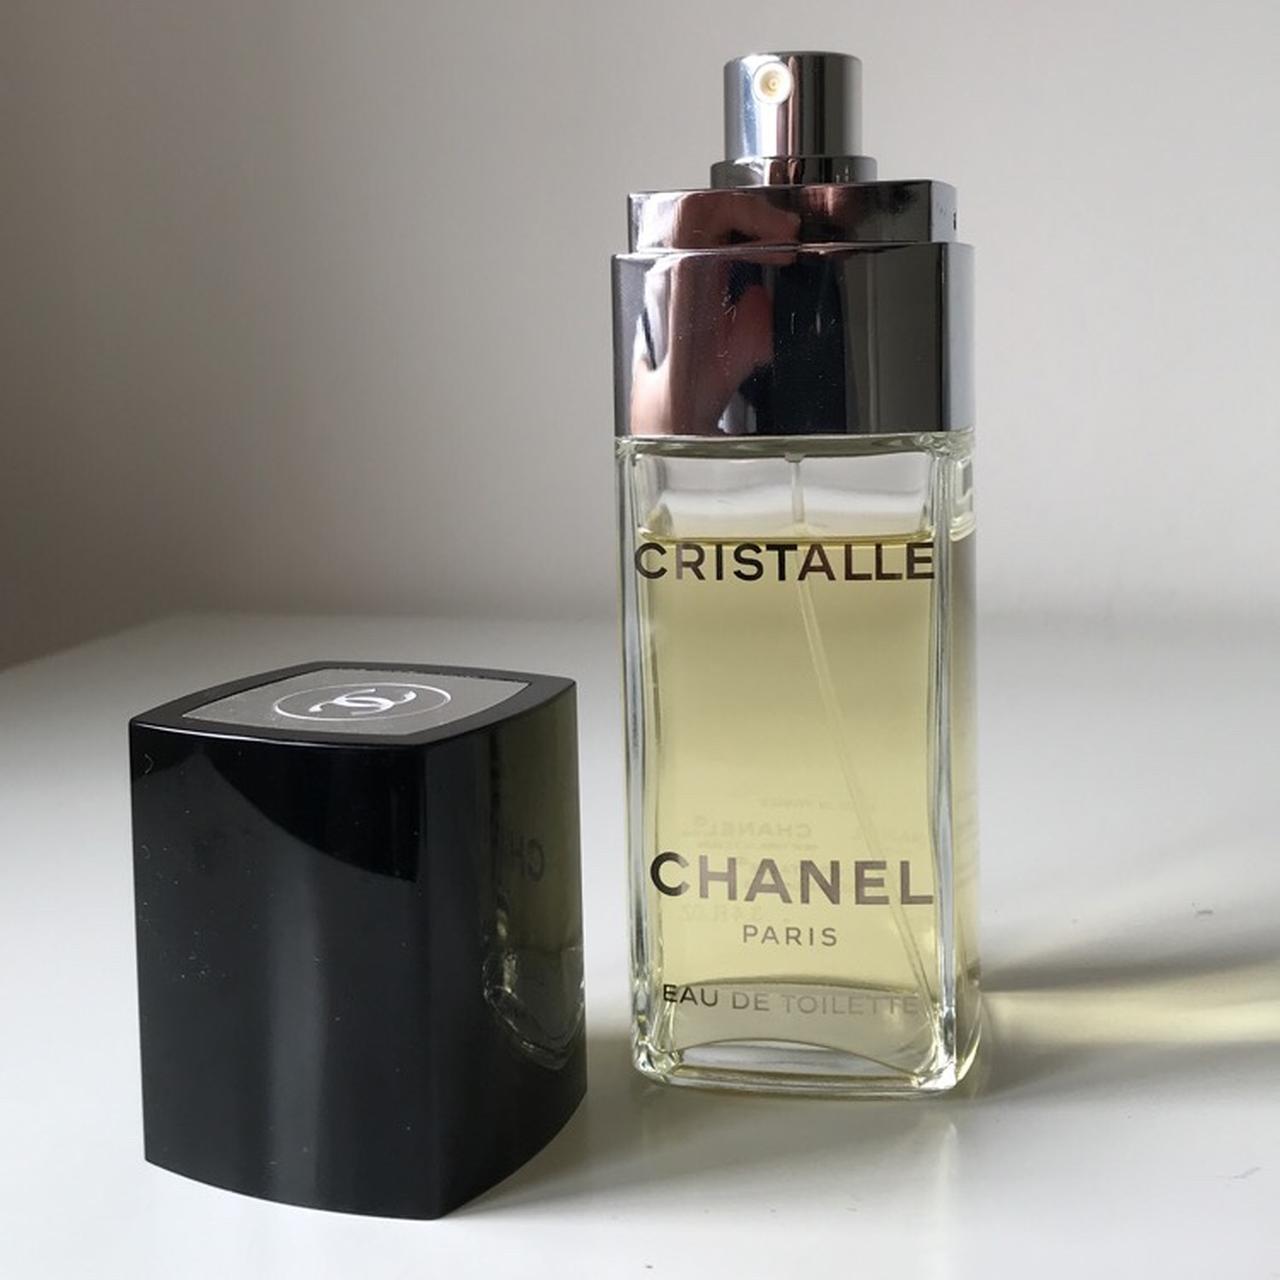 Chanel Cristalle Eau De Toilette 100ml, Only used a